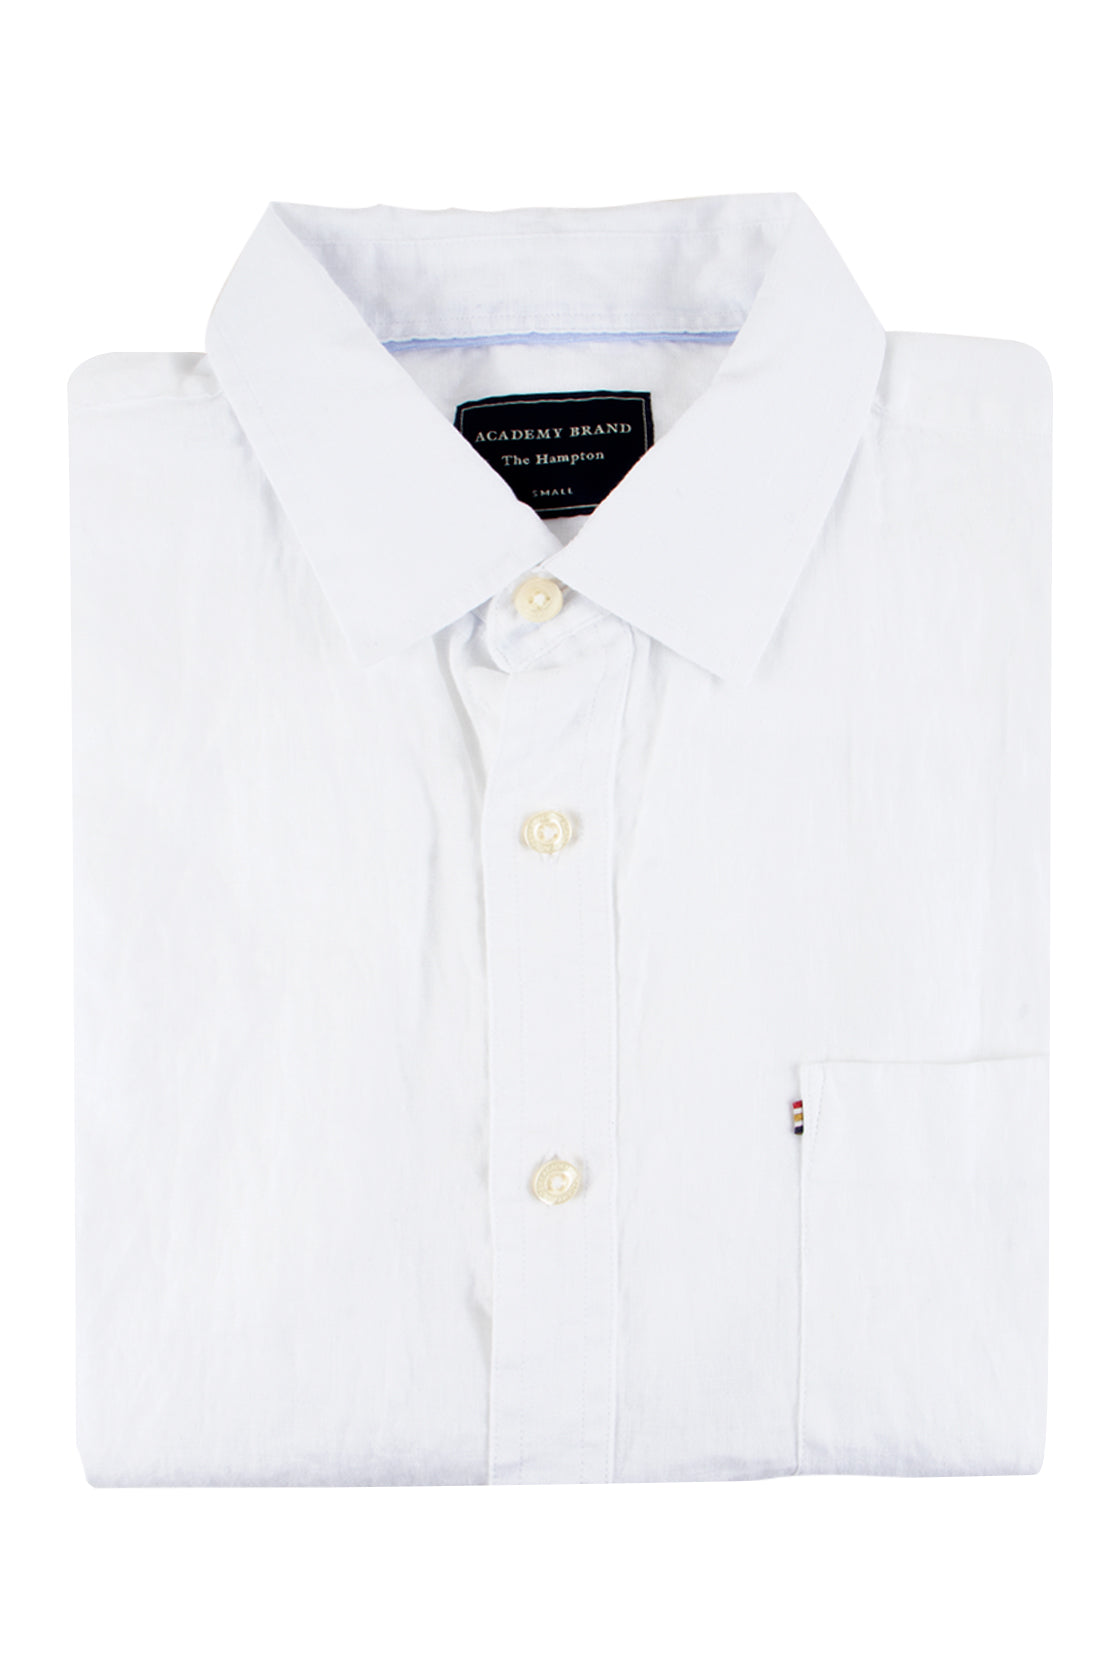 The Academy Hampton Linen Short Sleeve Shirt White